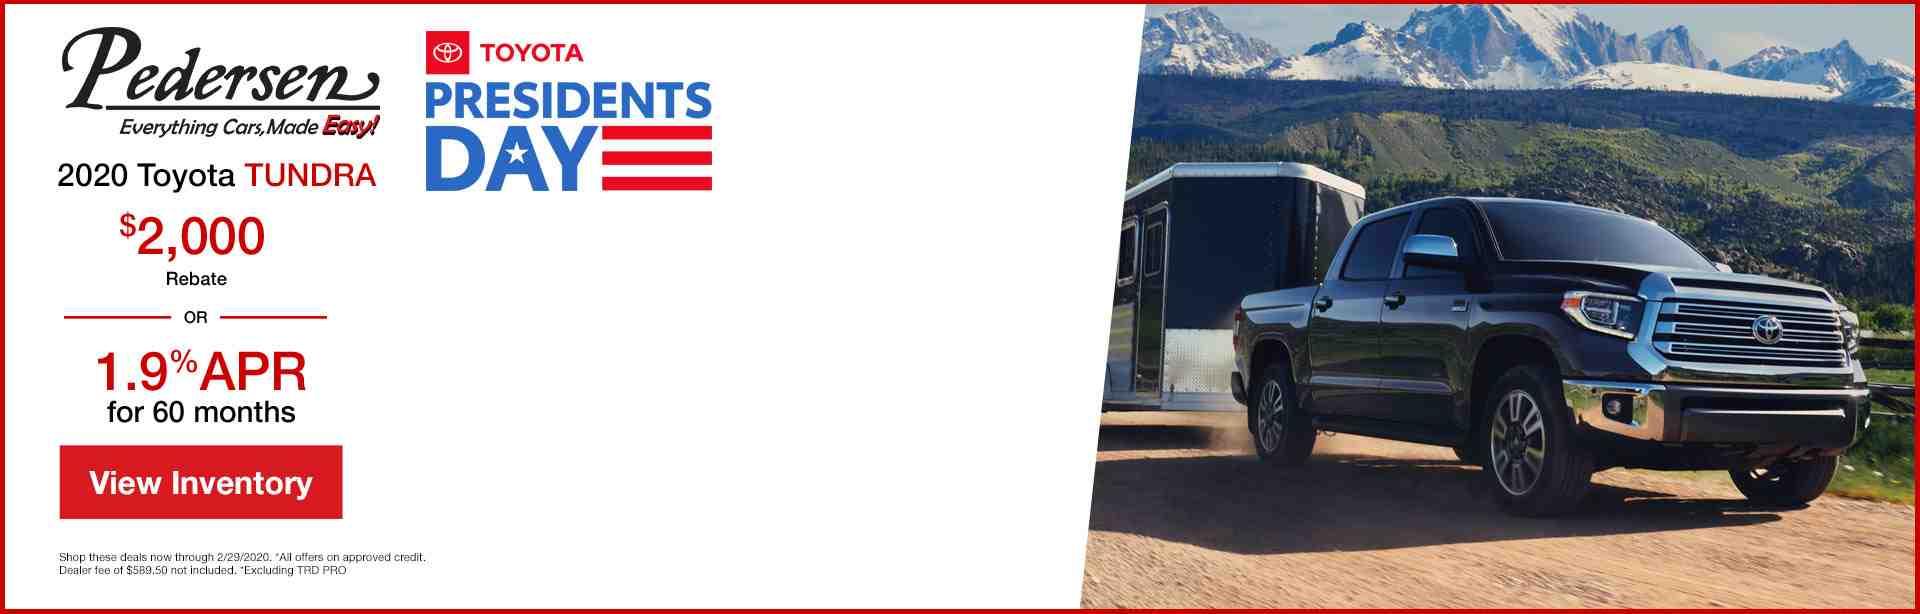 Prius, Tacoma & Corolla Dealership in Fort Collins | Pedersen Toyota